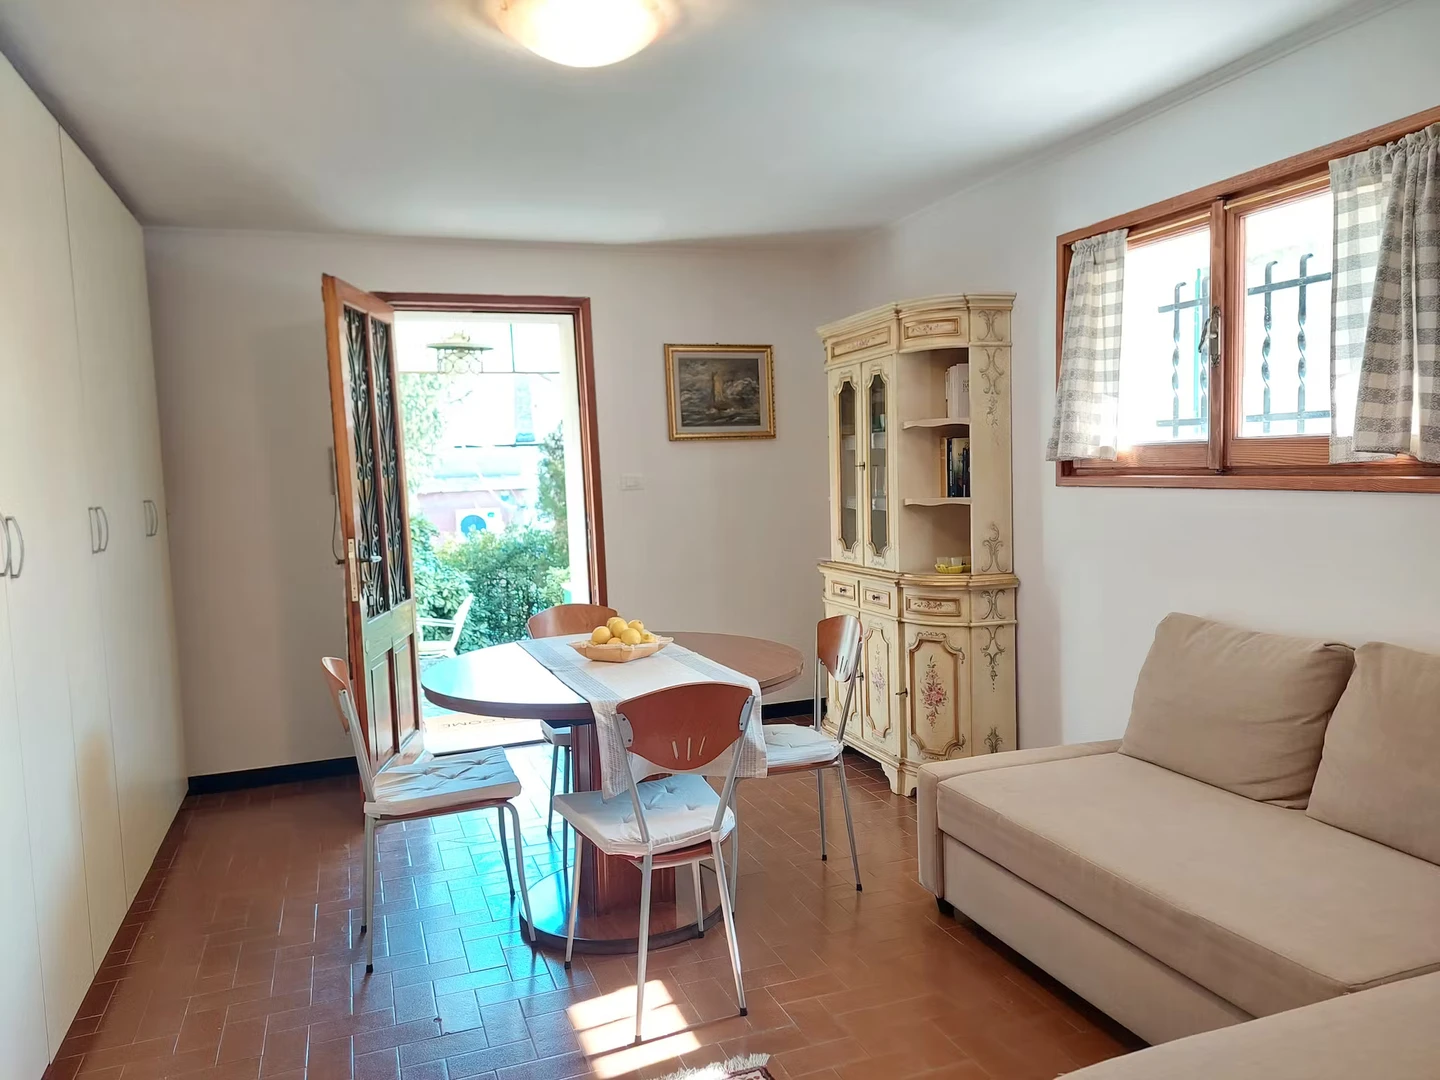 Logement avec 3 chambres à Gênes